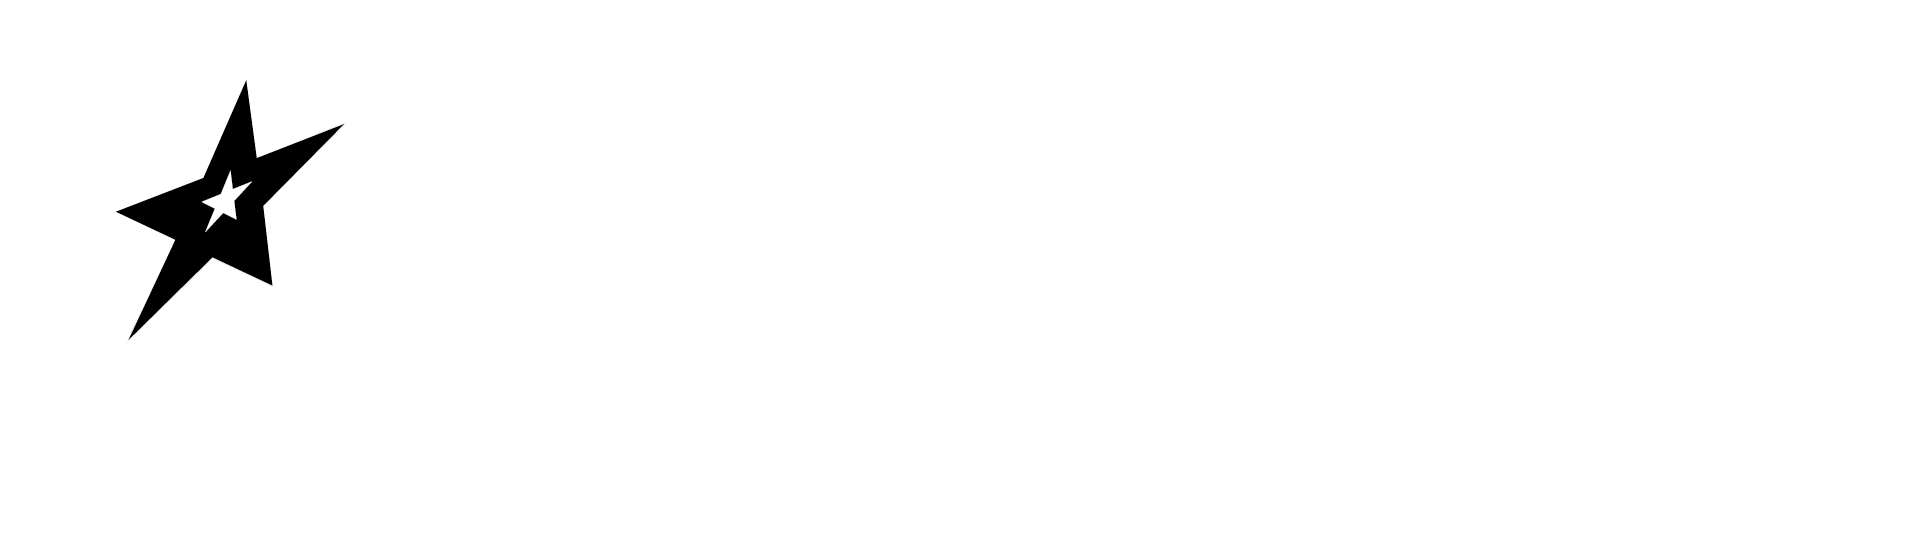 Assembly Winter 2020 logo